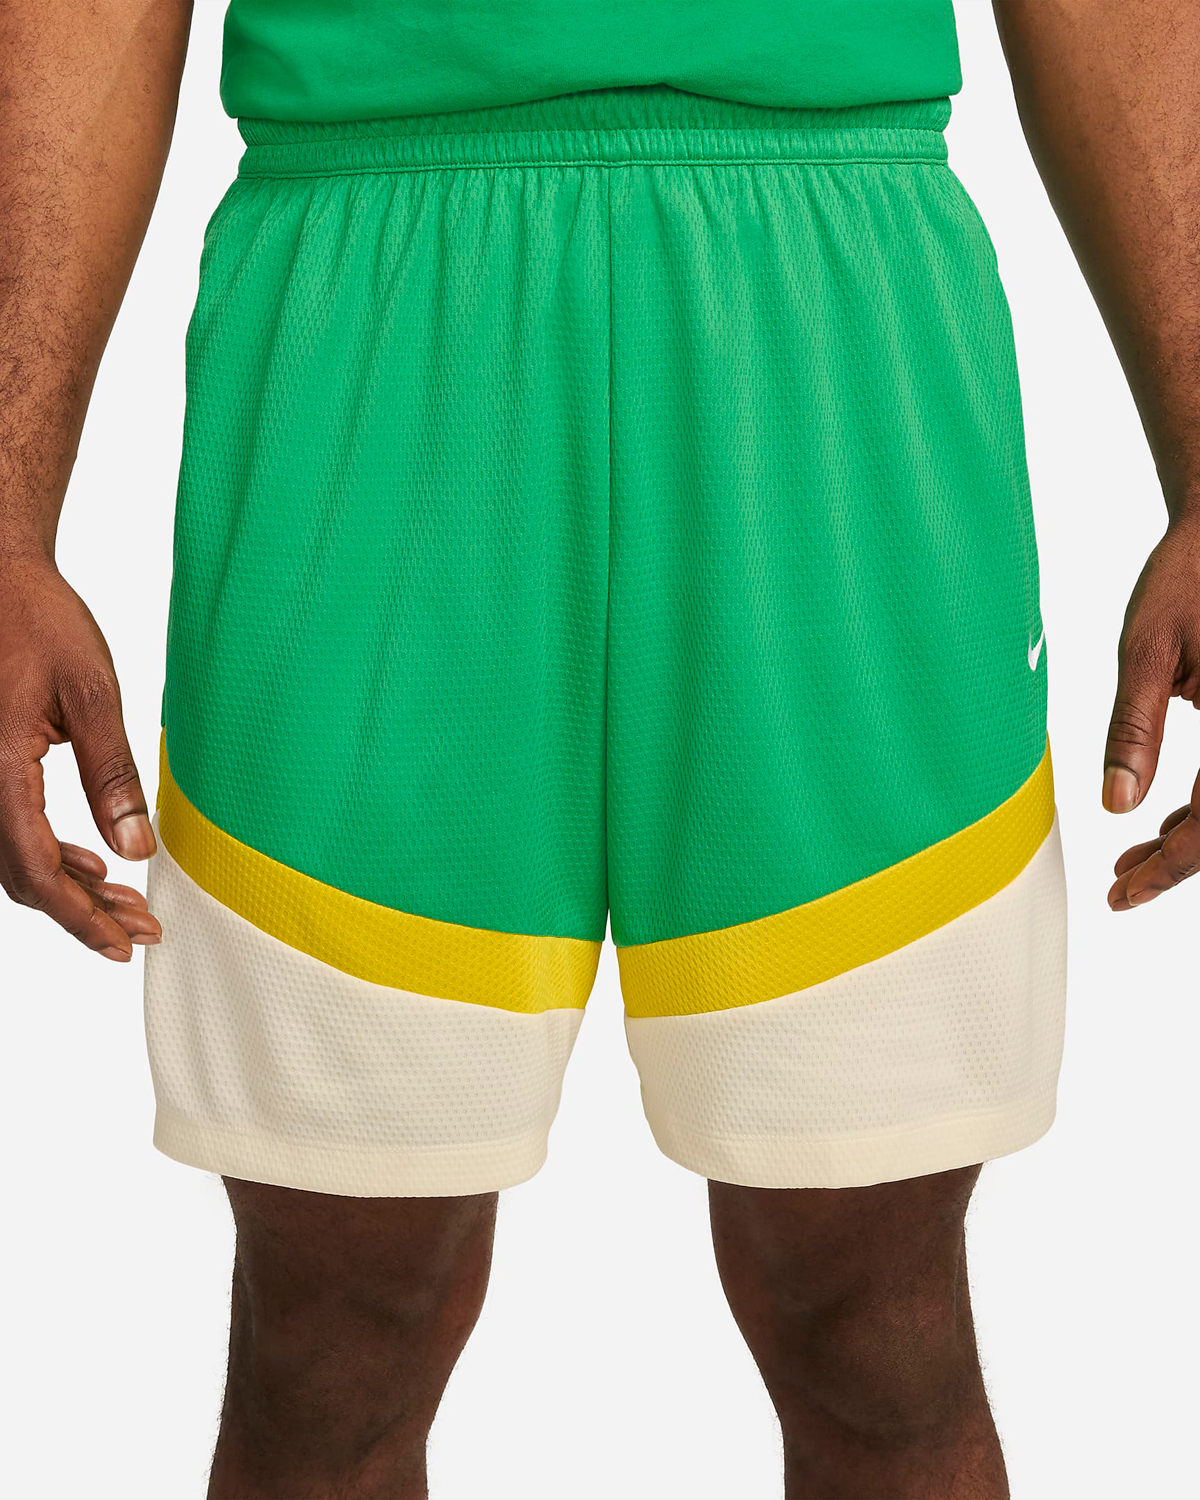 Nike-Stadium-Green-Basketball-Shorts-2